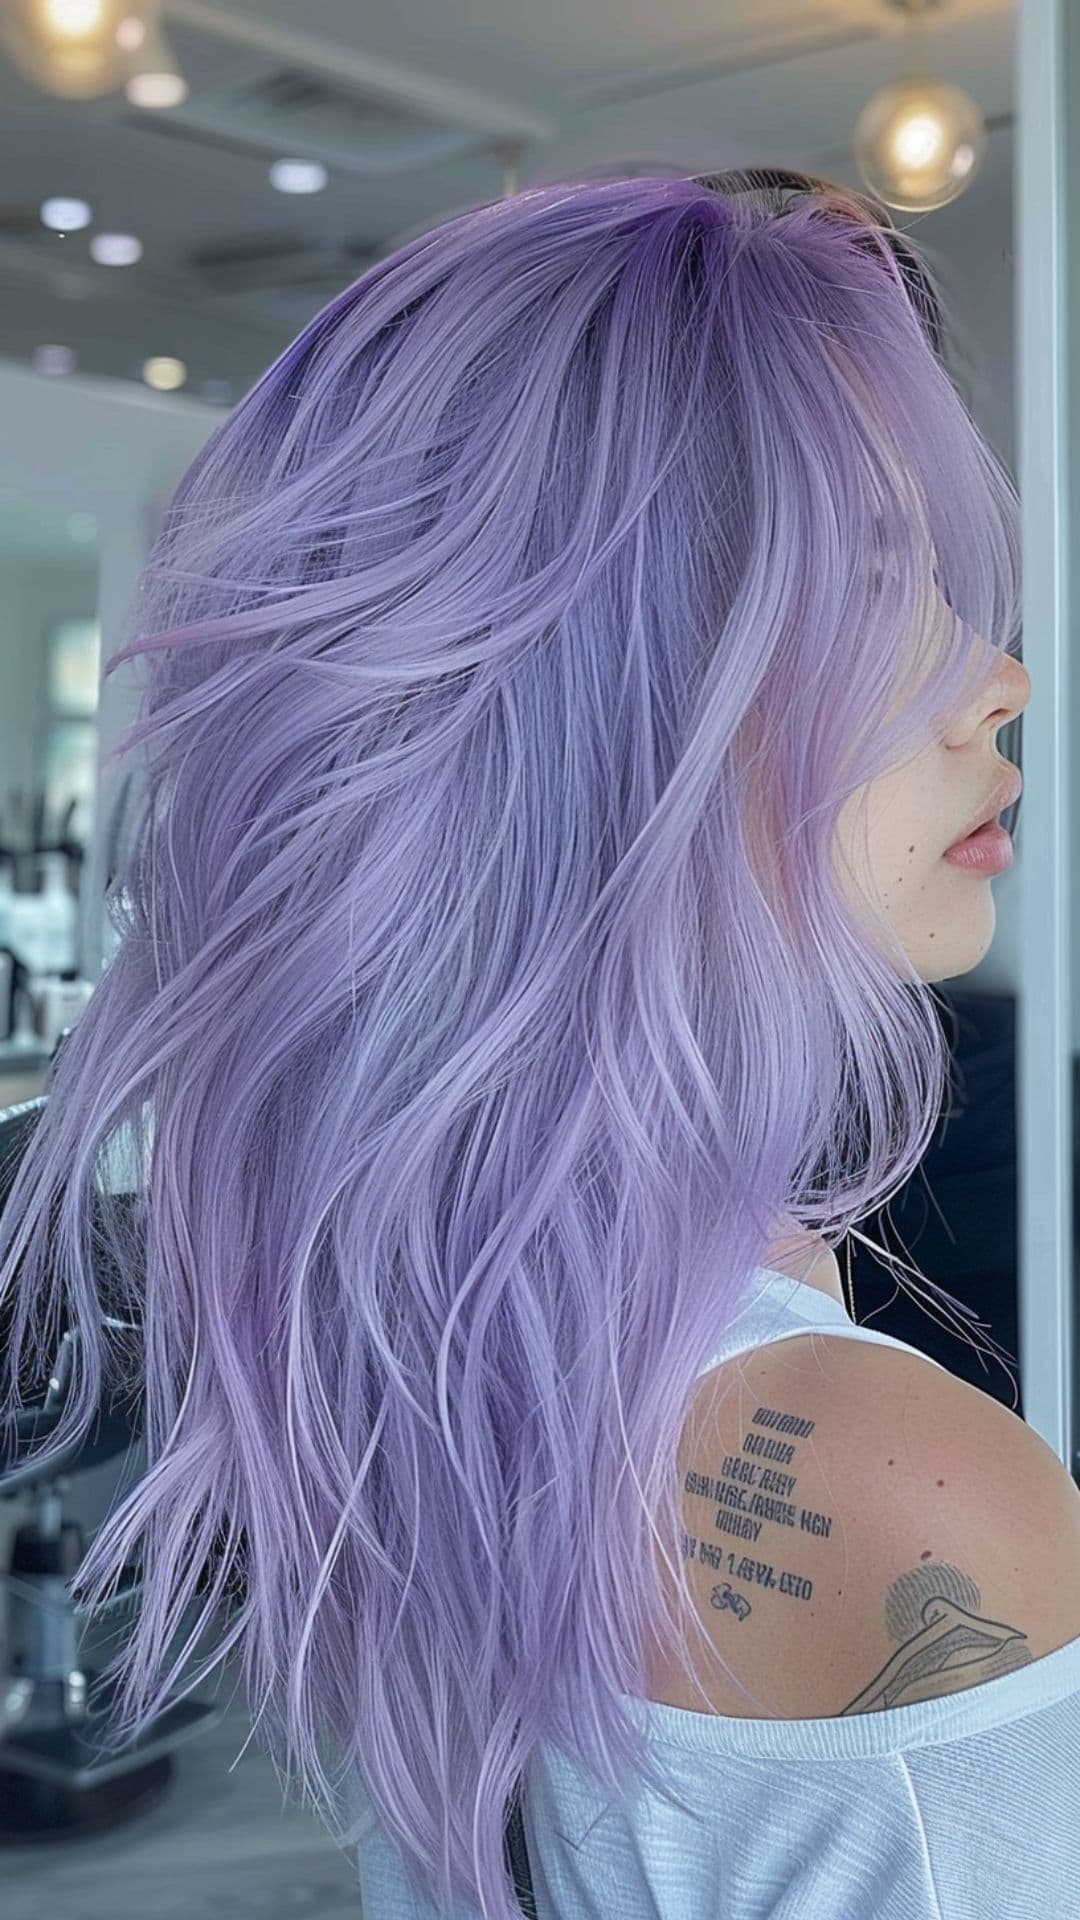 A woman modelling a pastel lavender hair.